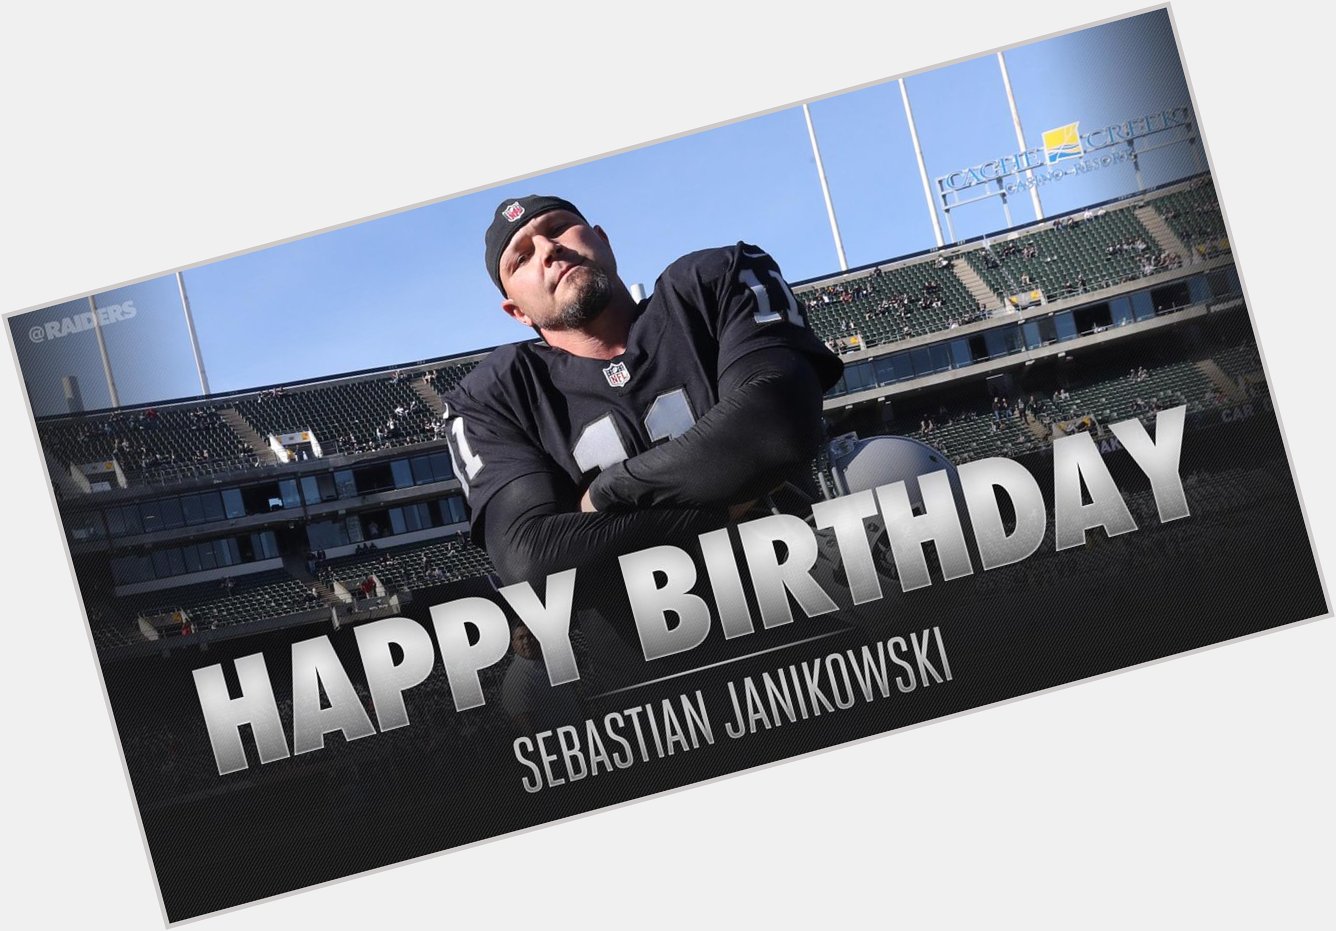 Happy Birthday to kicker Sebastian Janikowski! 